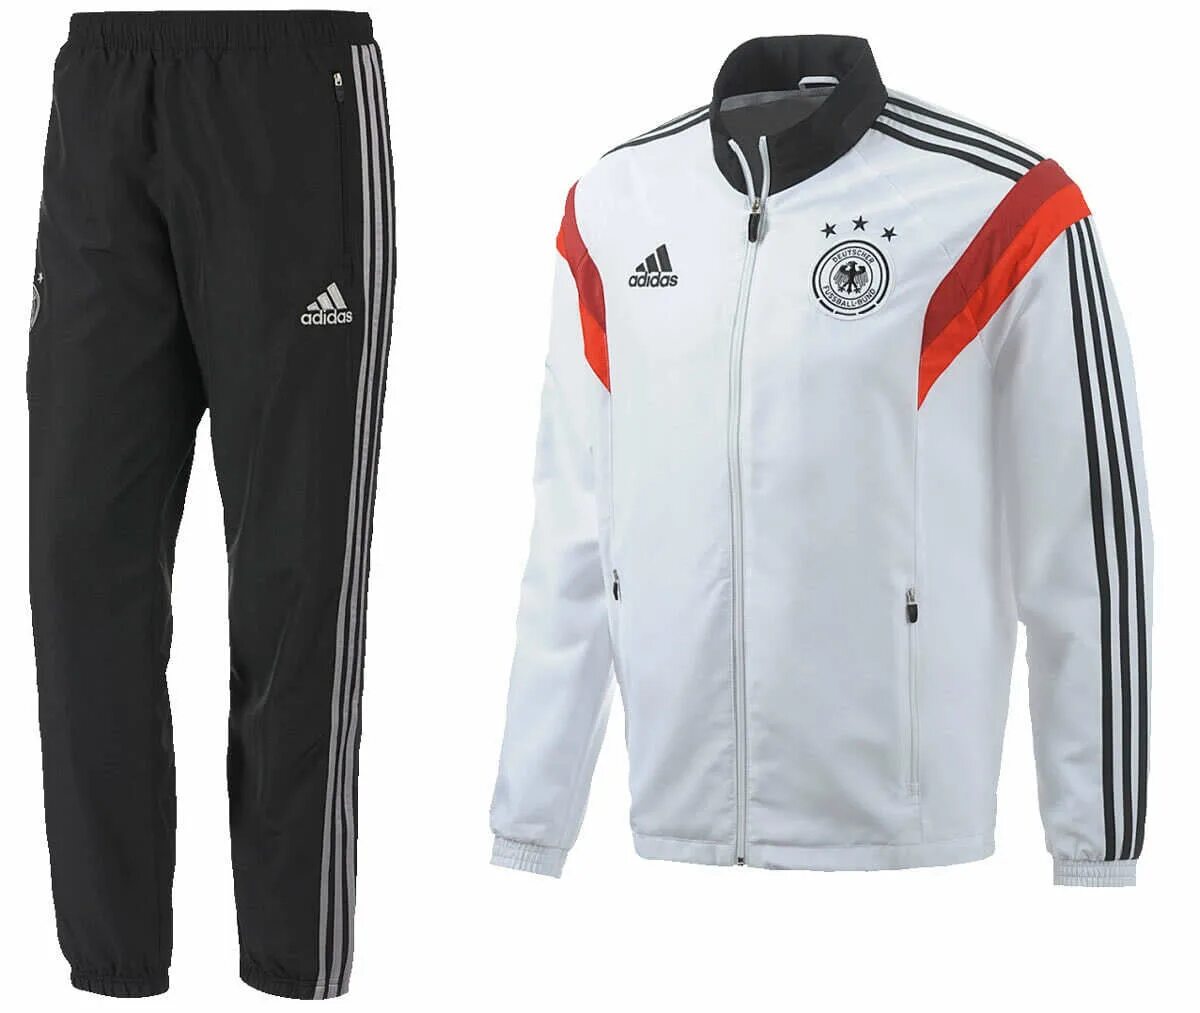 Adidas DFB костюм. Deutscher Fussball Bund adidas спортивный костюм. Олимпийка адидас deutscher Fussball Bund. Белая мастерка адидас сборной Германии.